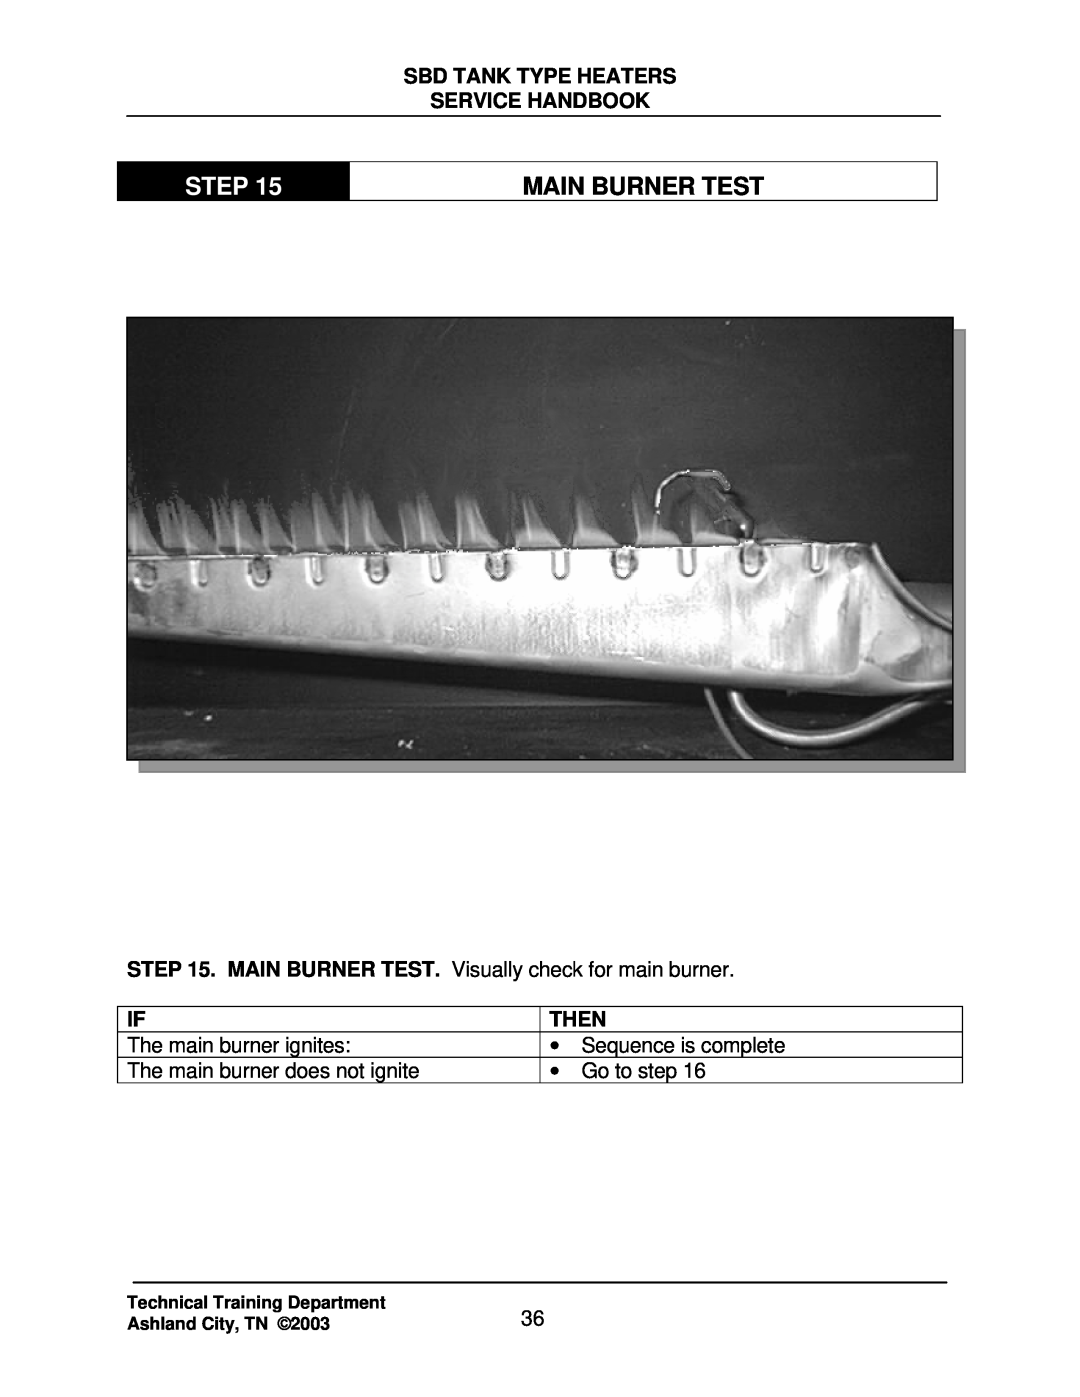 State Industries SBD71 120, SBD85 500 manual Main Burner Test, Step, Sbd Tank Type Heaters Service Handbook, Then 